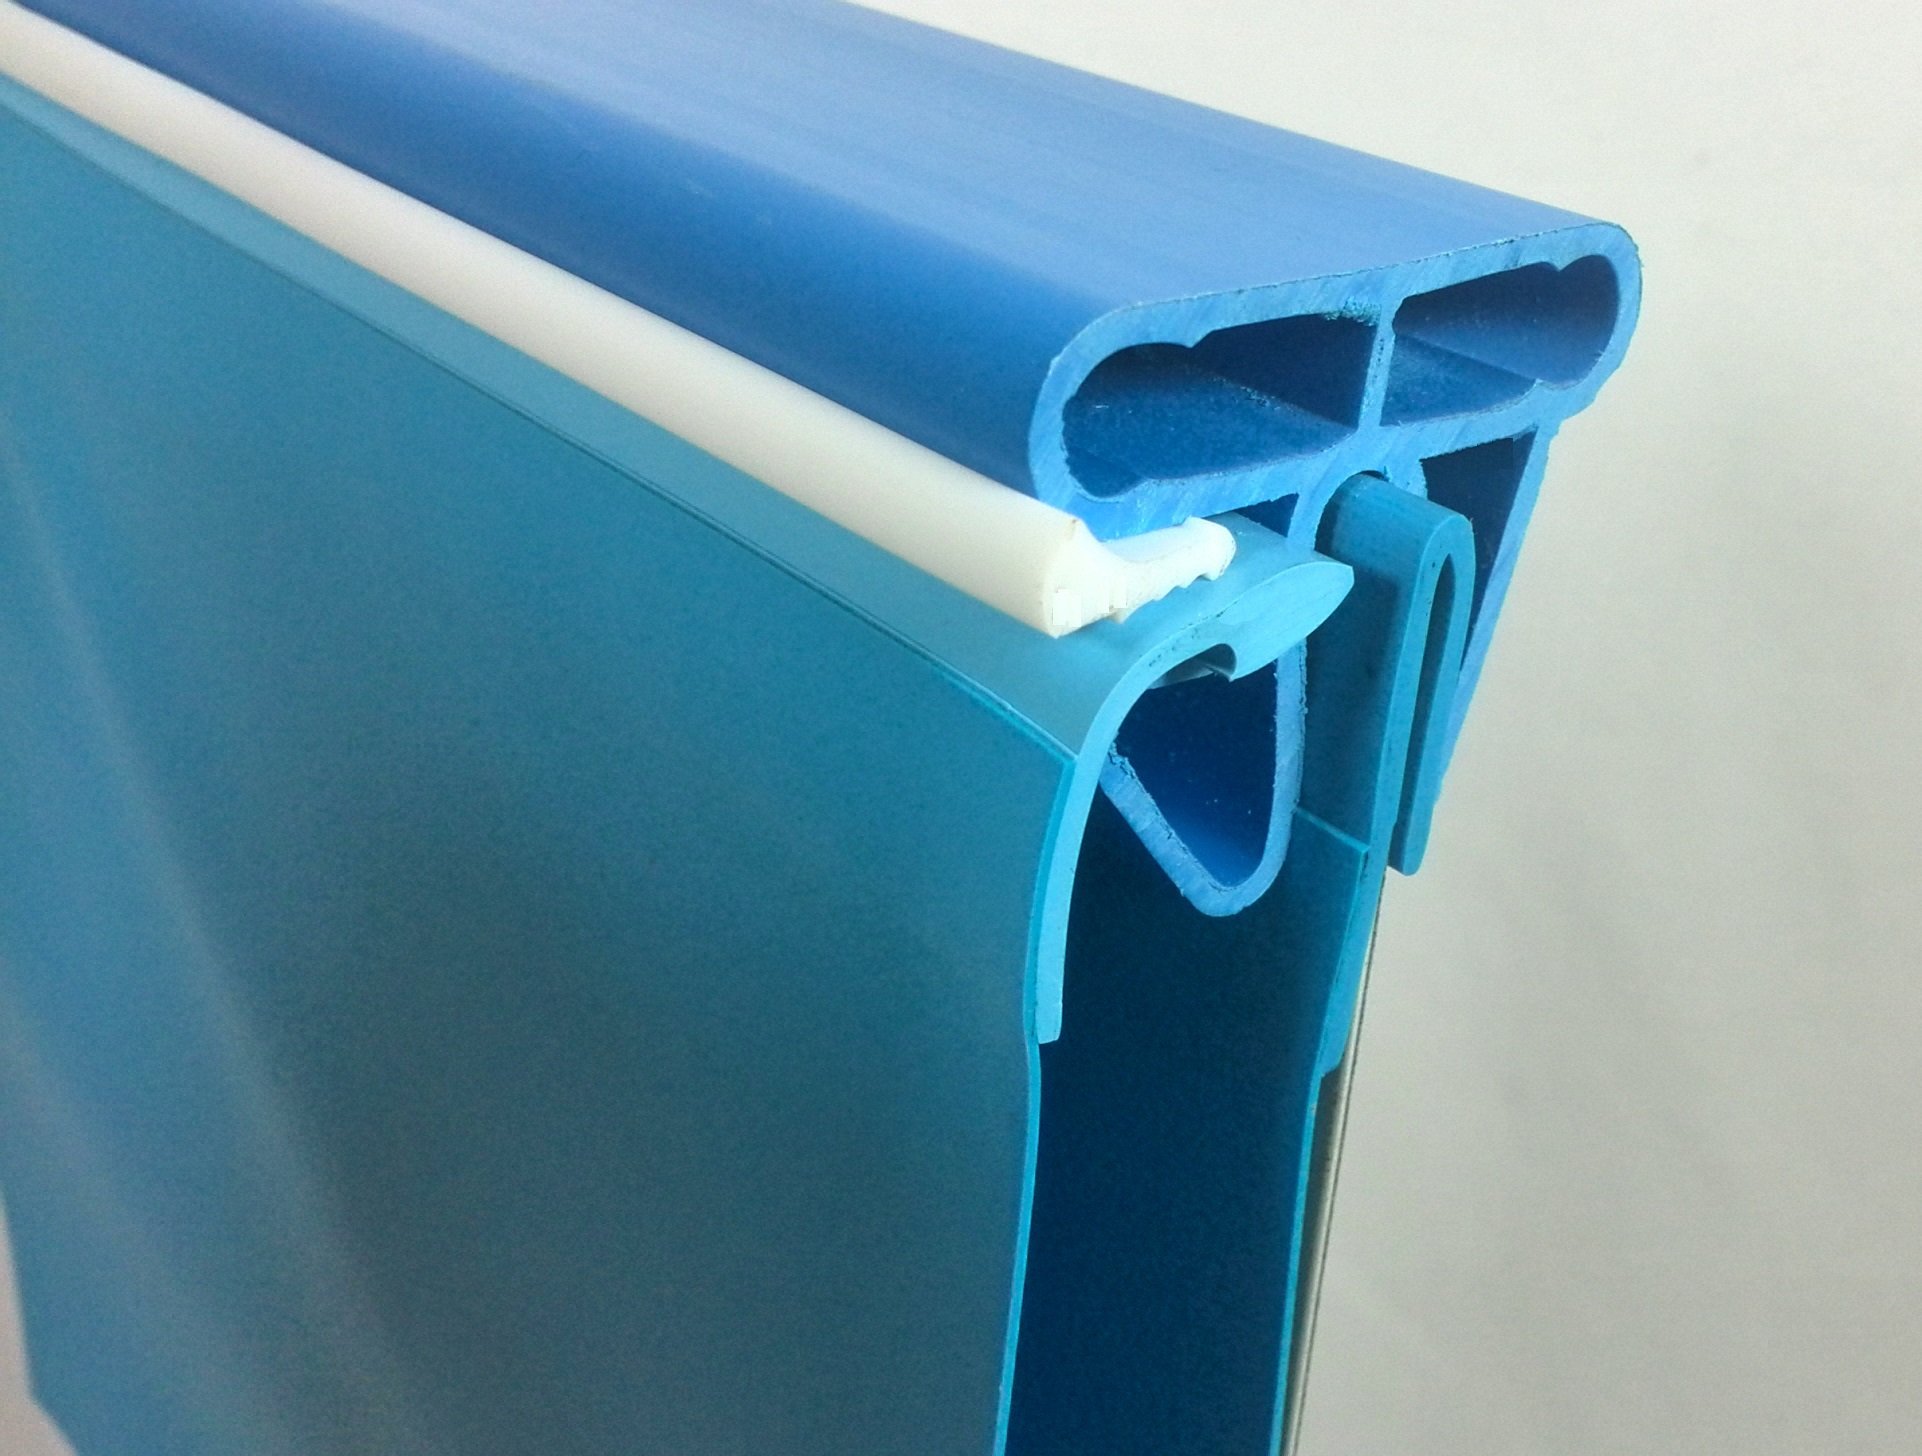 Stahlwandpool achtform Exklusiv 525x320x150 cm, Stahl 0,8 mm weiß, Folie 0,6 mm blau, Einhängebiese